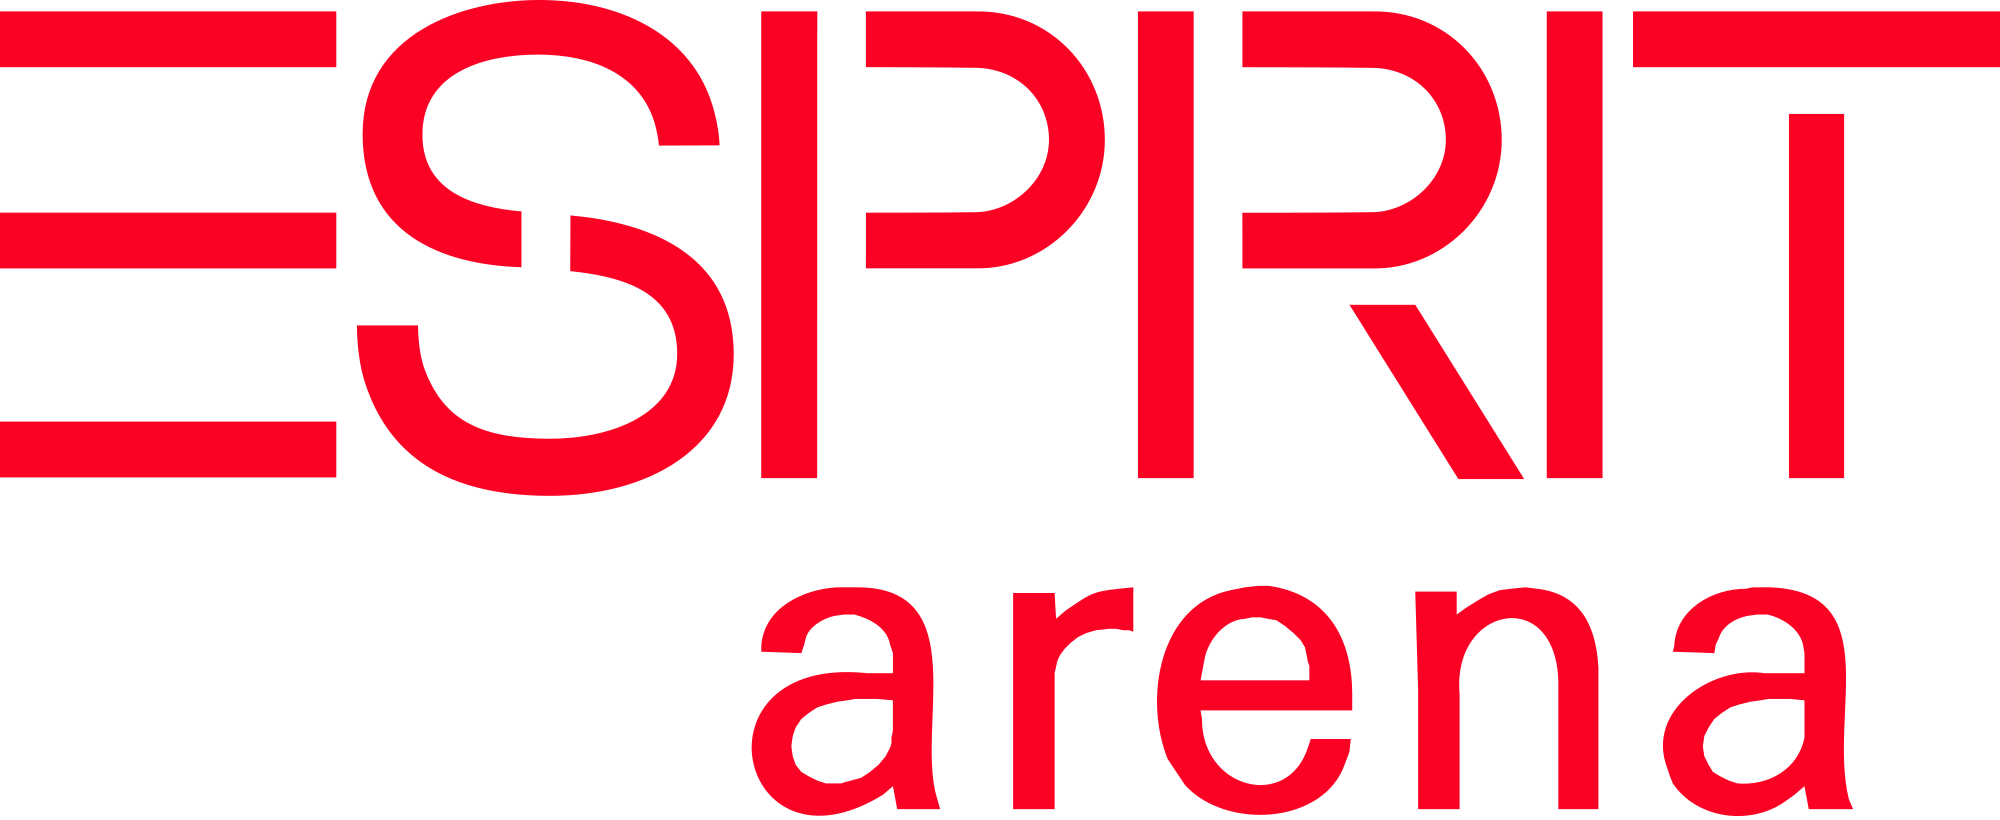 Esprit Logo - File:Esprit Arena logo.svg - Wikimedia Commons